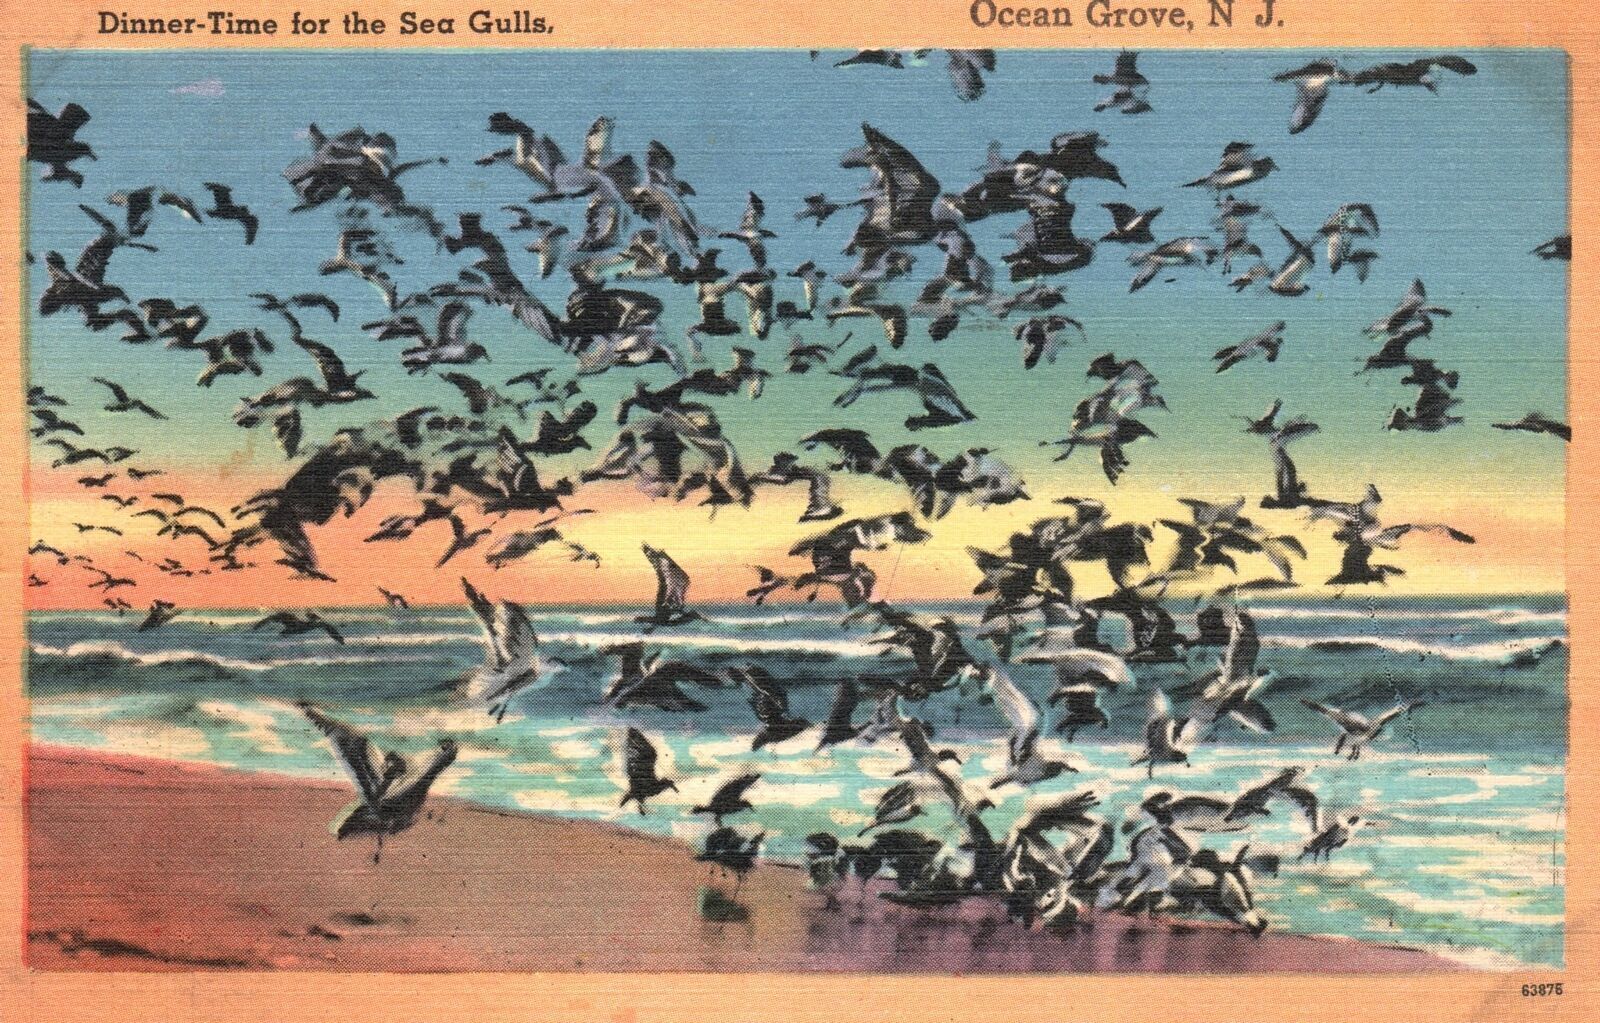 Vintage Postcard 1958 Dinner Time For The Sea Gulls Ocean Grove New Jersey NJ